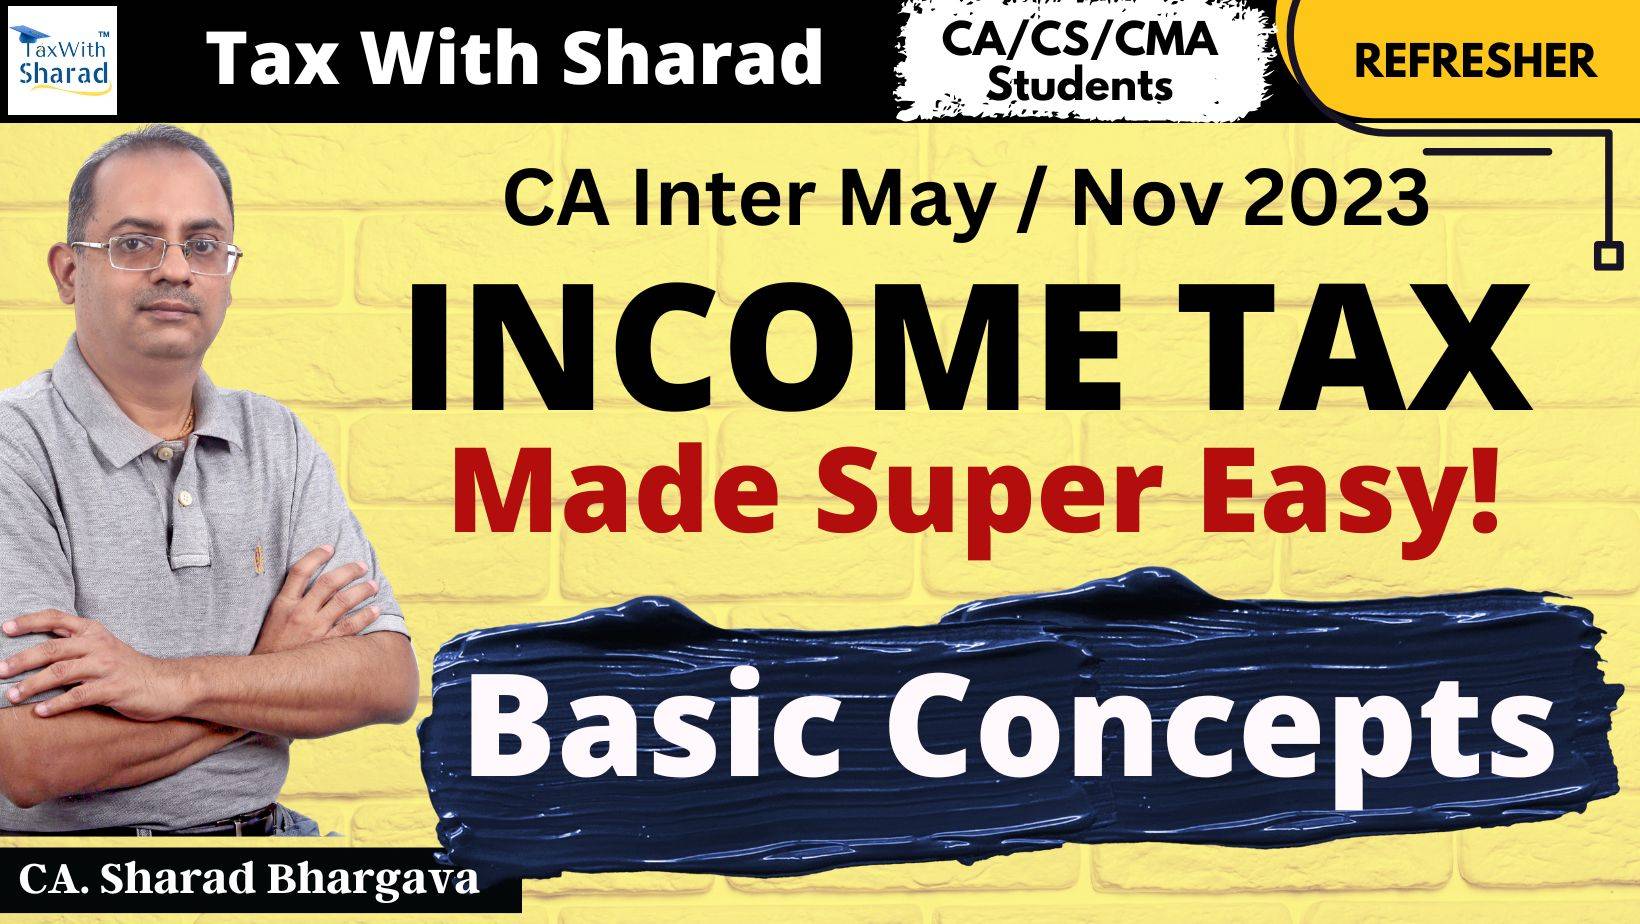 Refresher (DT) / Basic Concepts / CA Inter May/Nov 2023 / CA. Sharad Bhargava